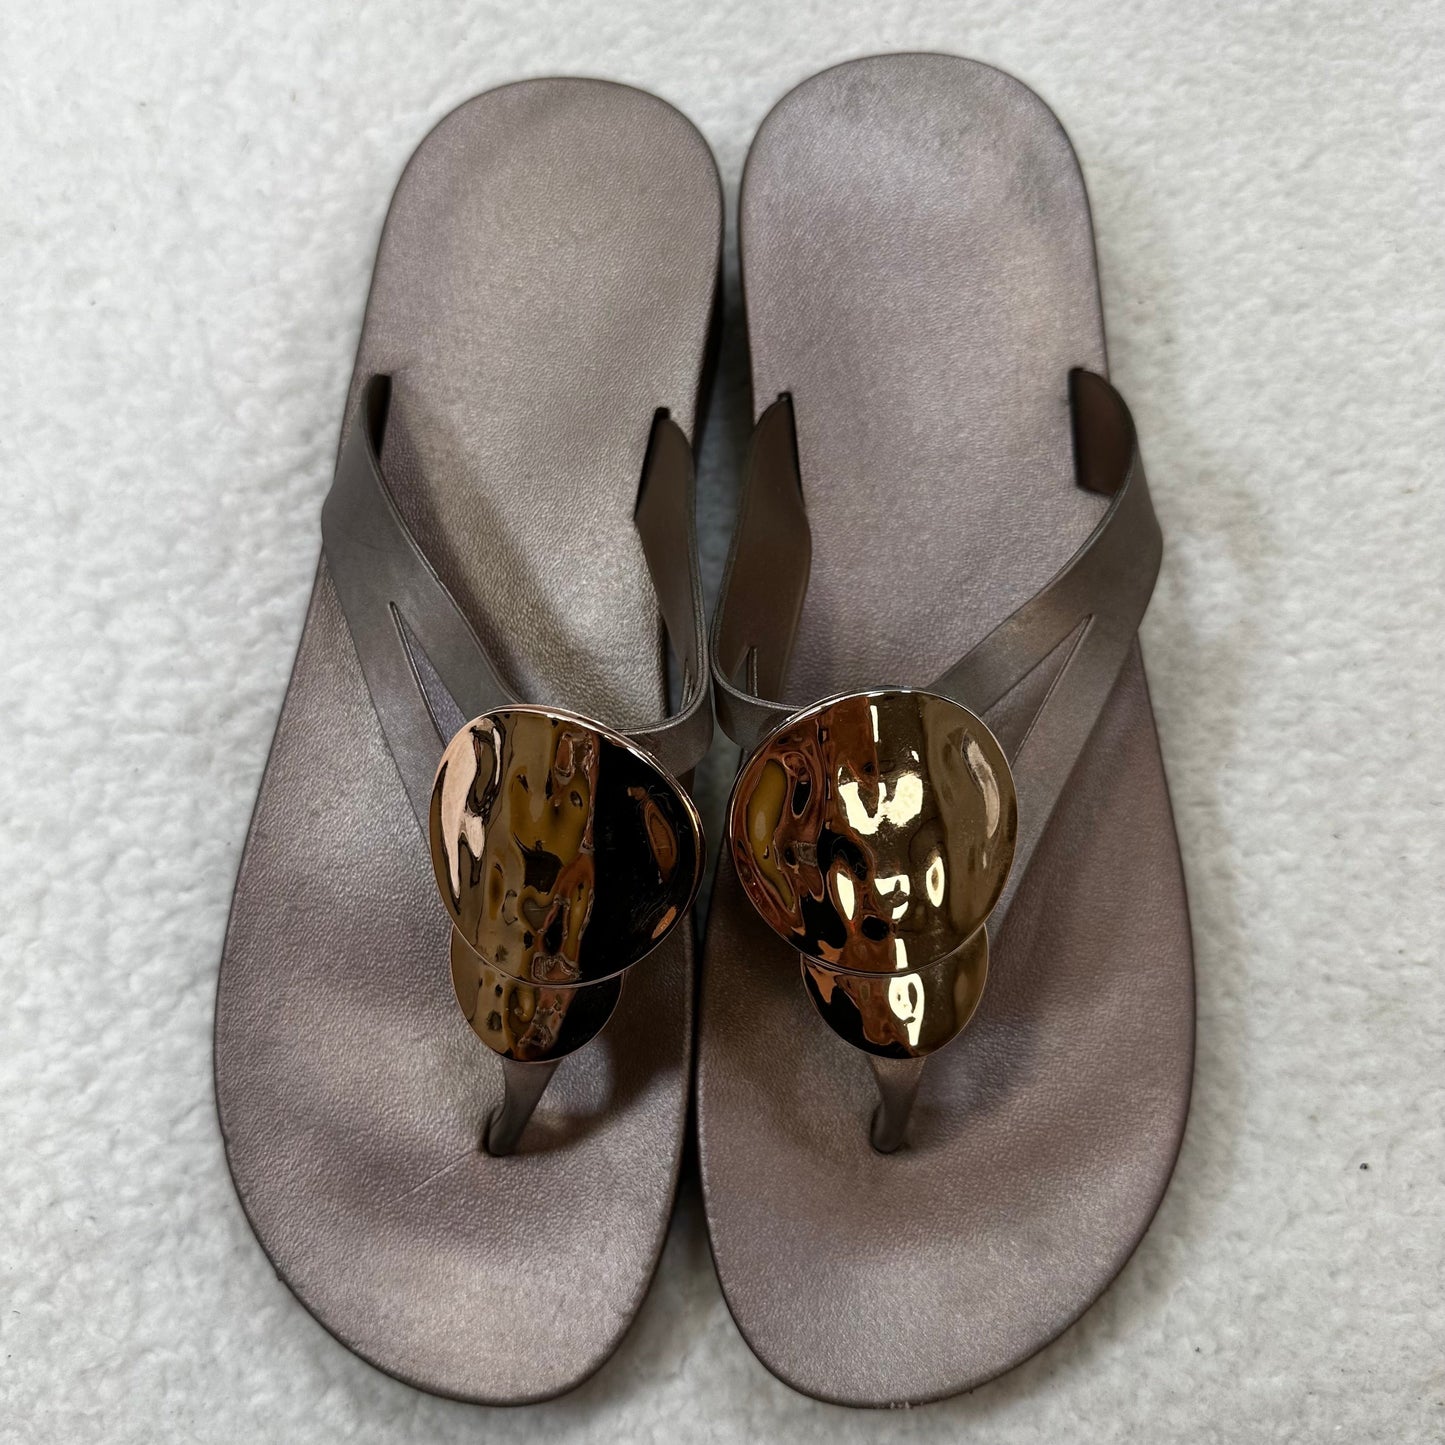 Pewter Sandals Flip Flops Clothes Mentor, Size 9